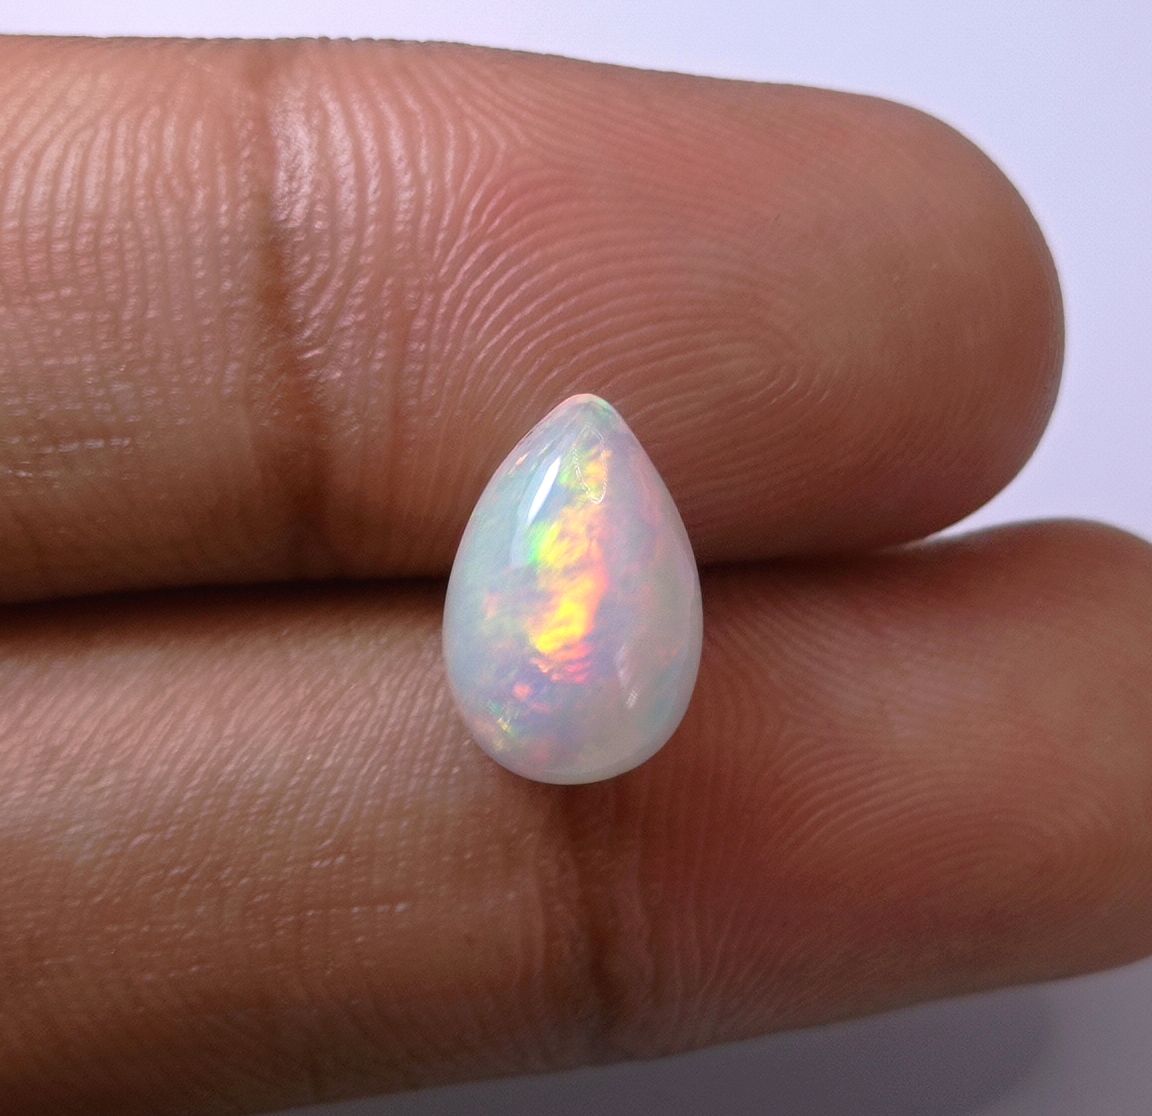 2.8ct Opal for Sale - White Fire Opal - Welo Opal - October Birthstone - 13x8mm